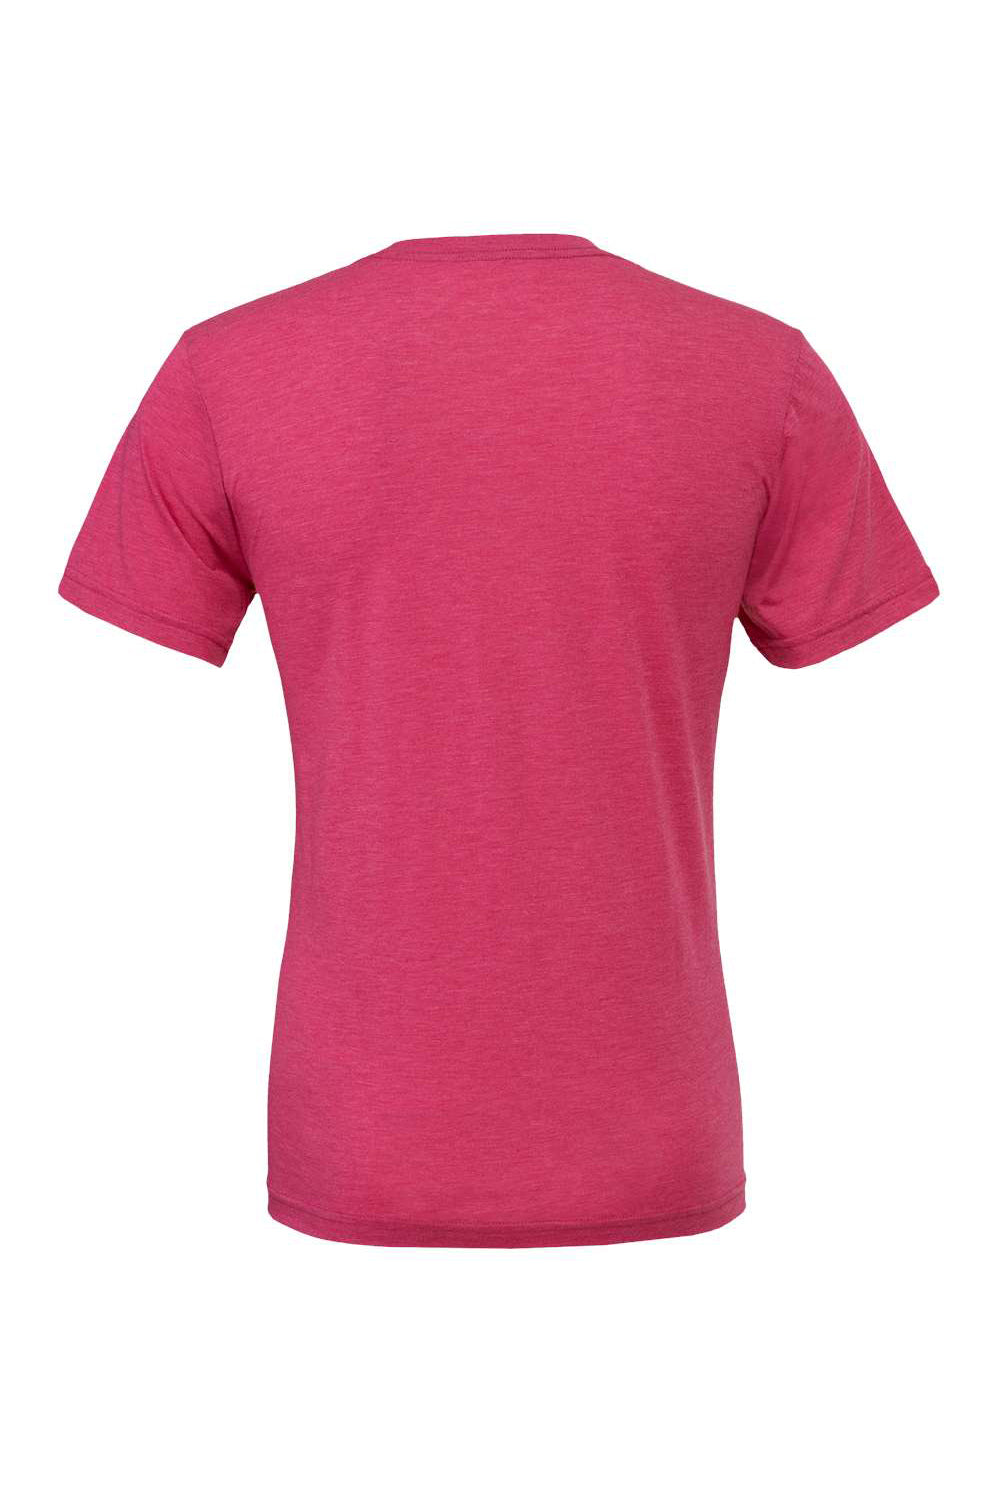 Bella + Canvas BC3413/3413C/3413 Mens Short Sleeve Crewneck T-Shirt Berry Pink Flat Back